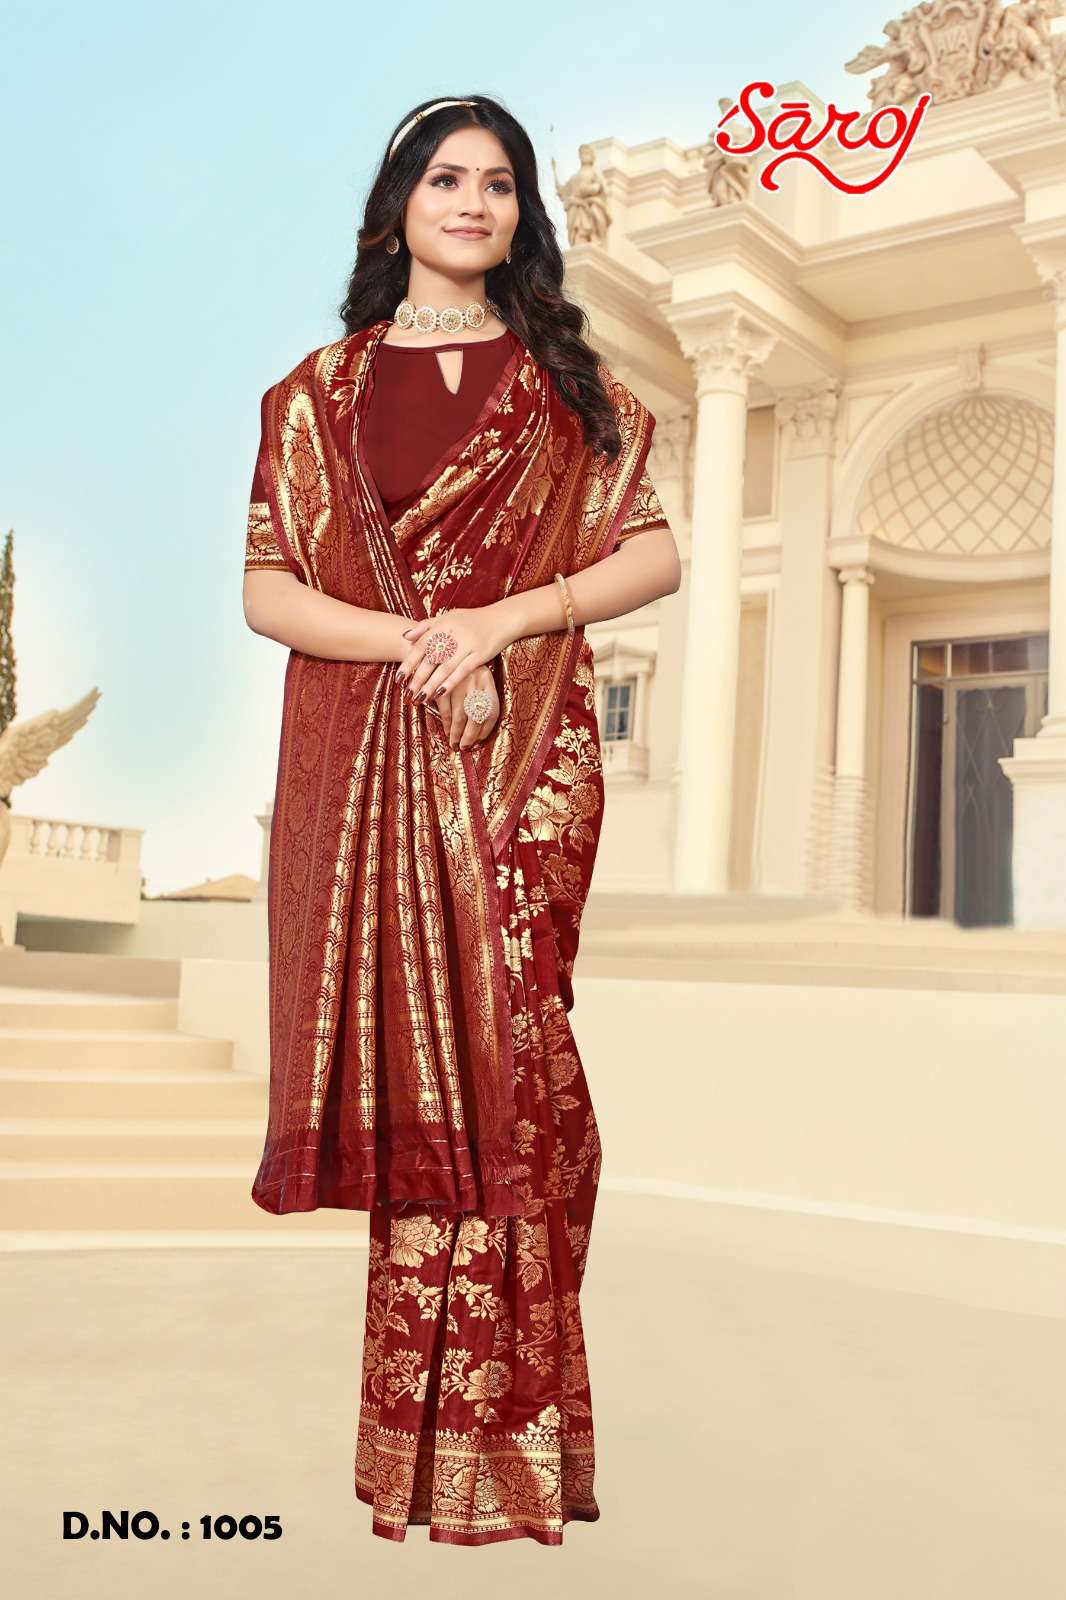 Saroj textile presents Kaamya vol 4 banarasi sarees catalogue